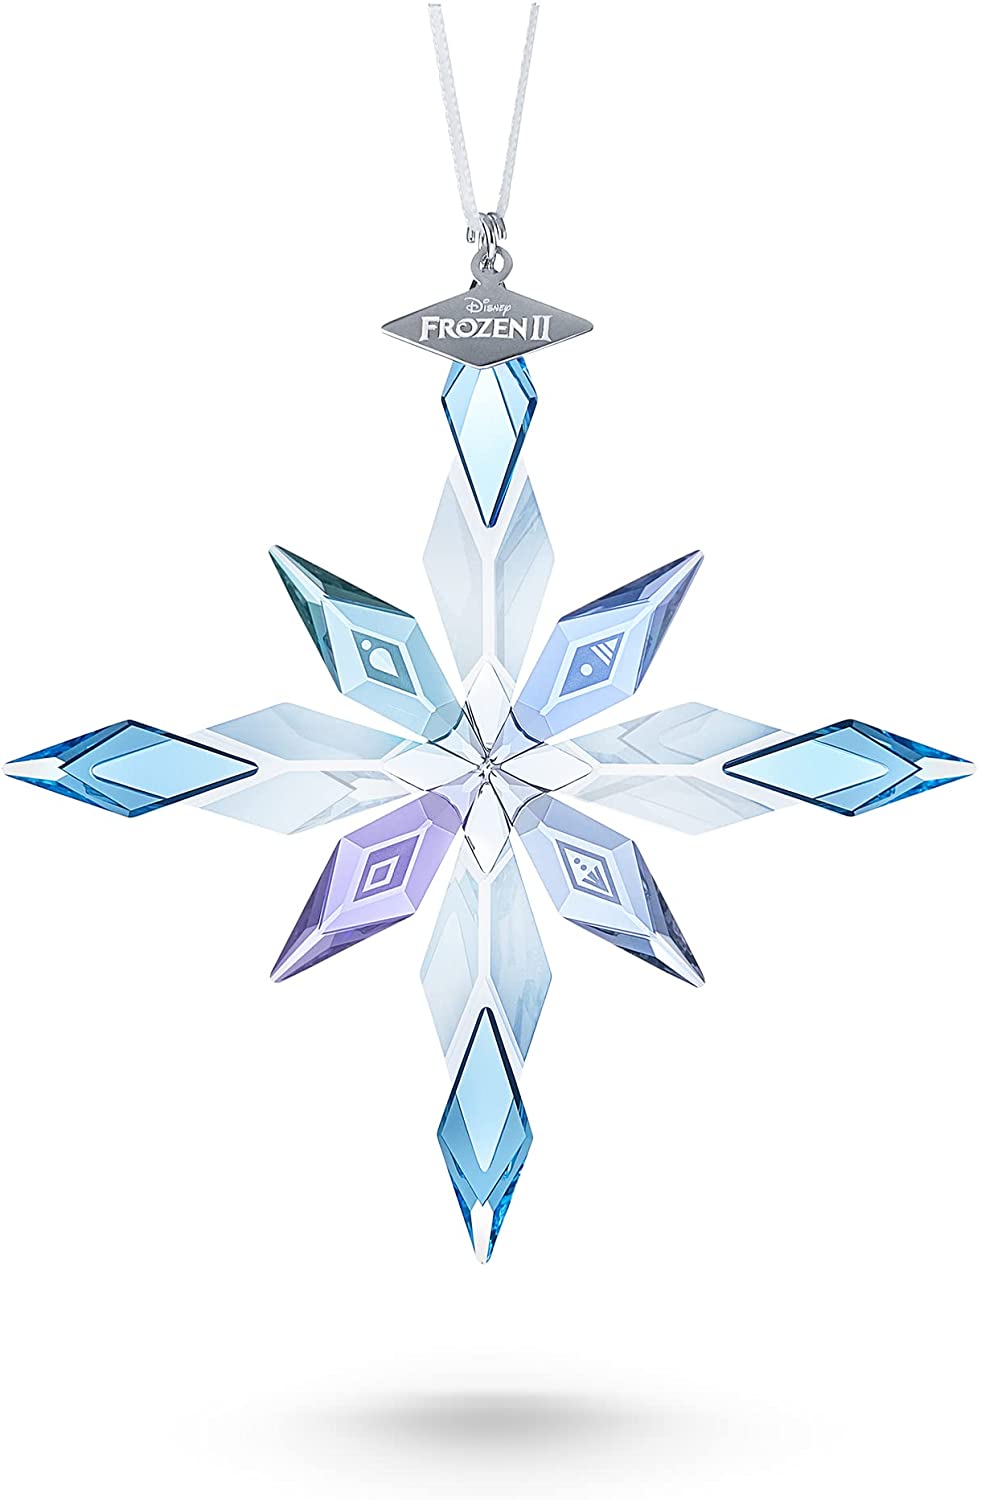 Swarovski Frozen 2 Snowflake Ornament, Decoration Made of Radiant Swarovski Crystals for Hanging